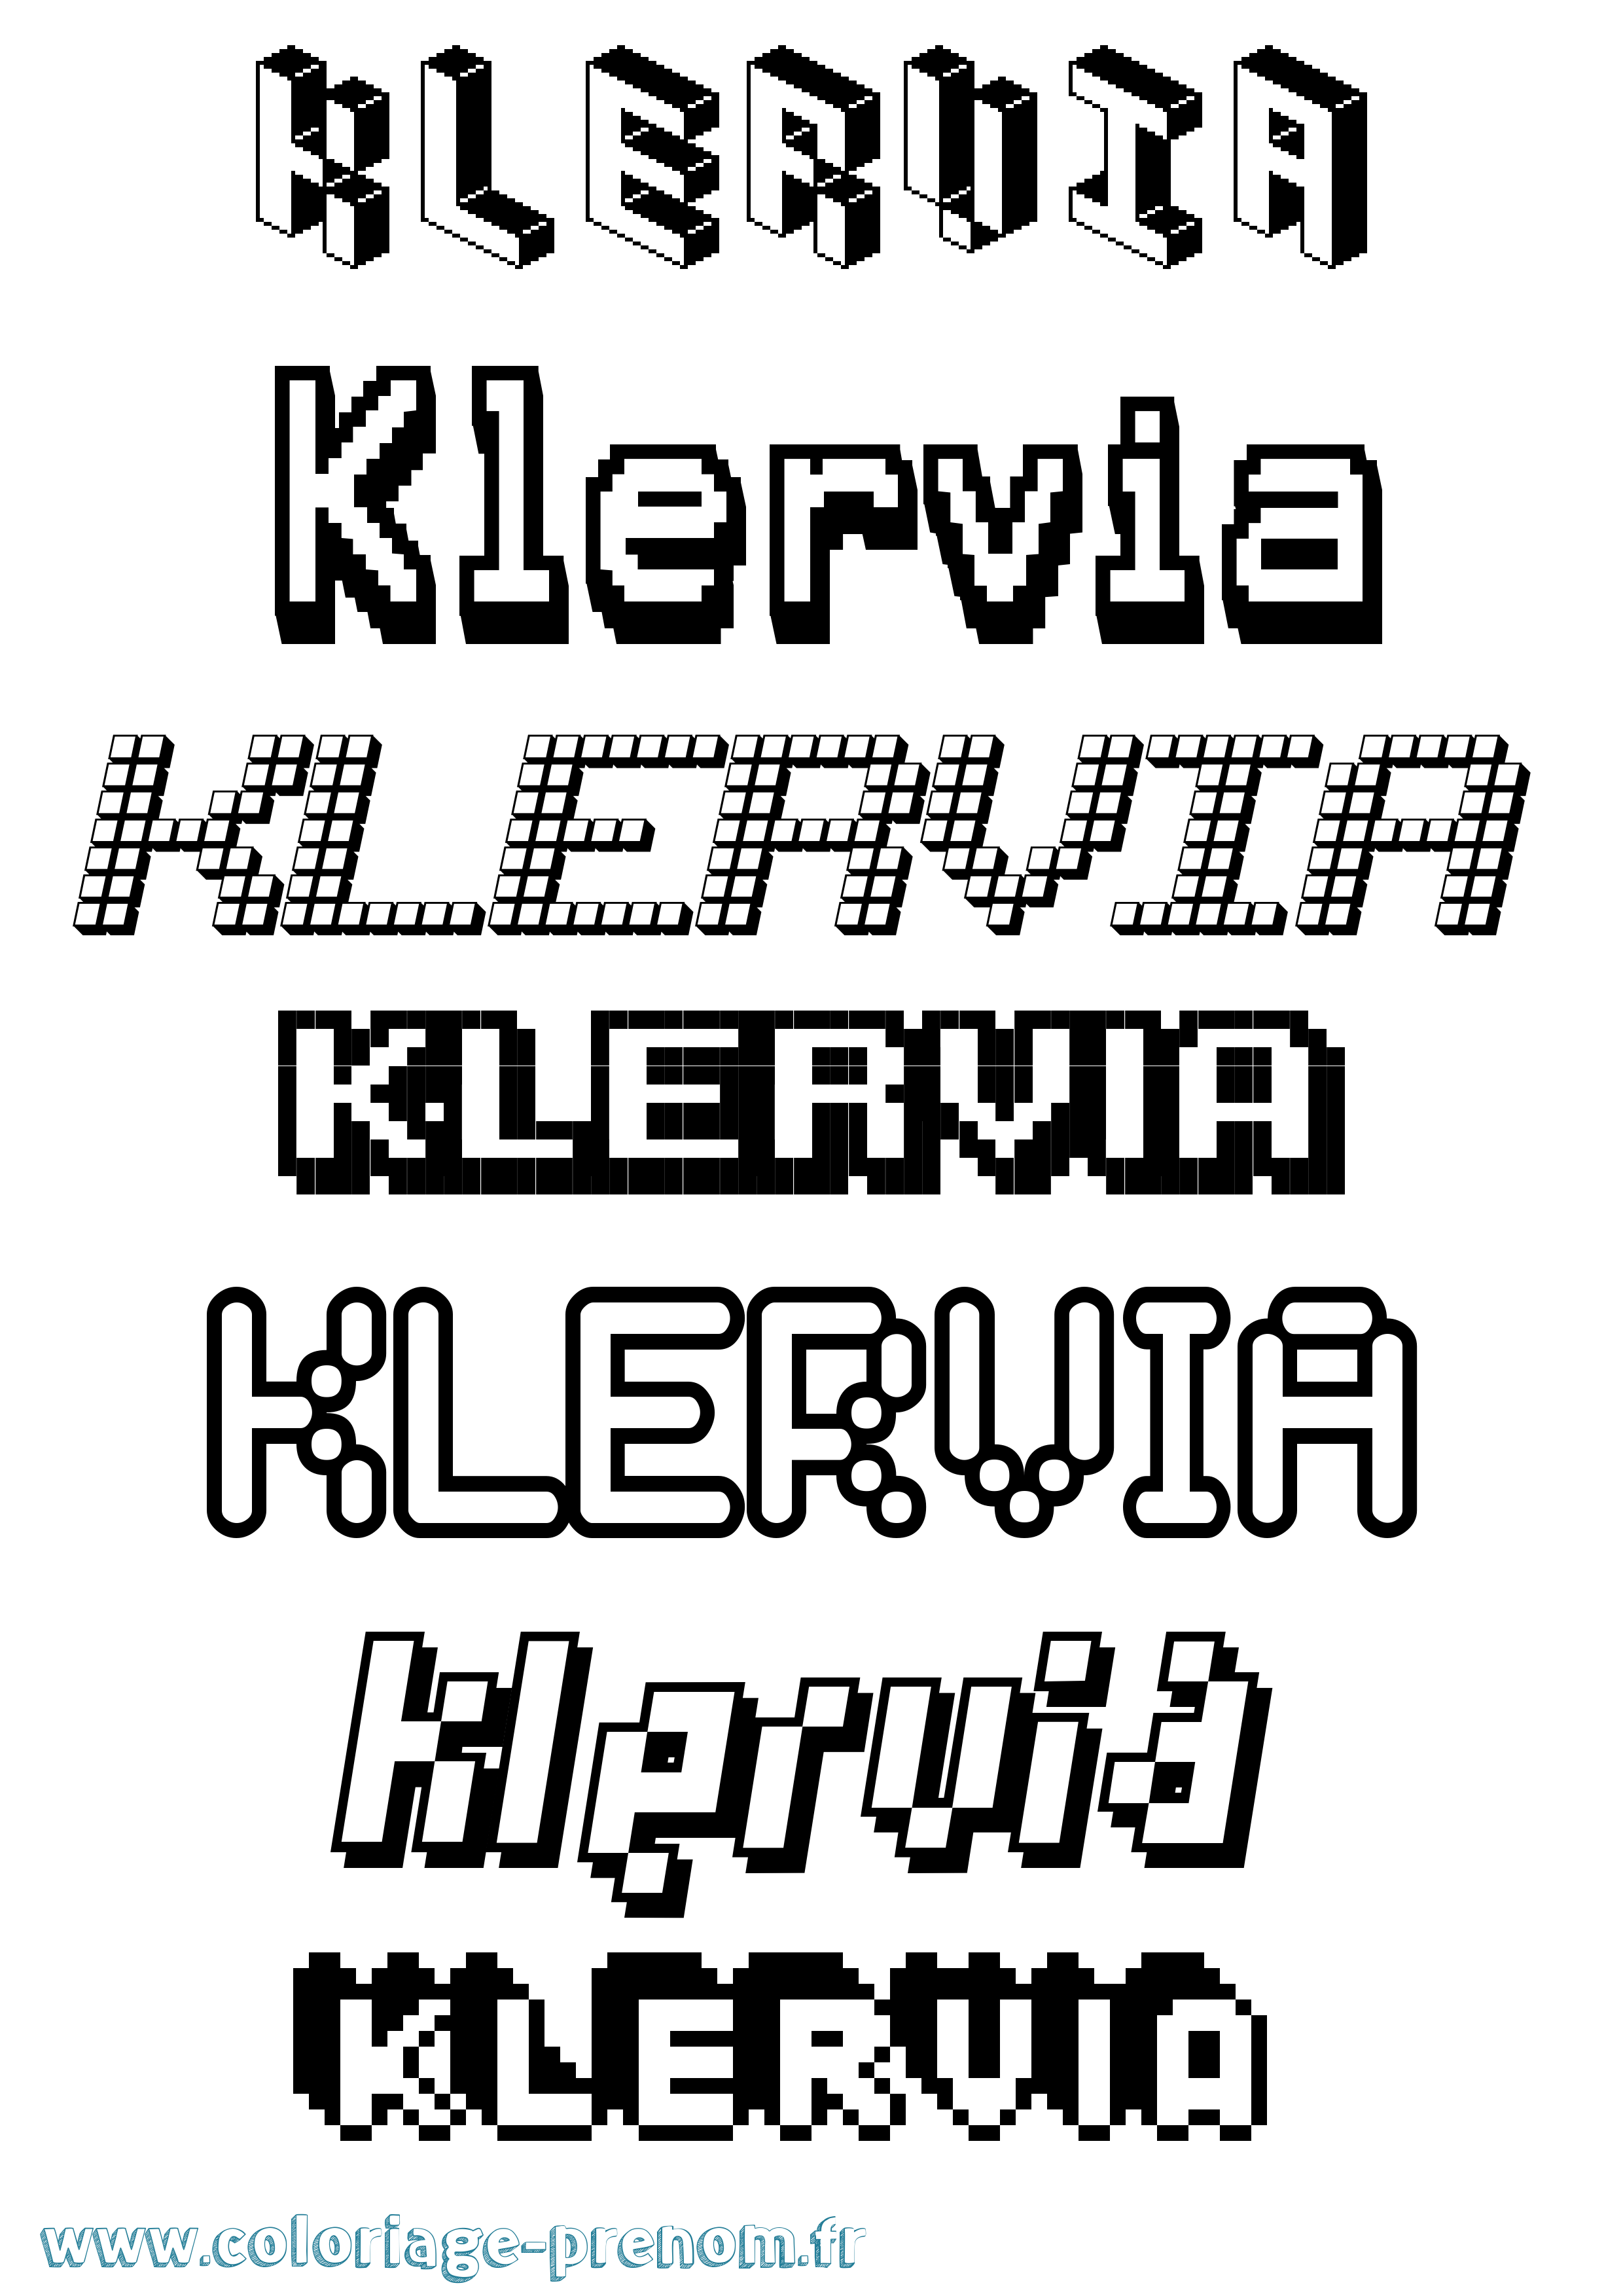 Coloriage prénom Klervia Pixel